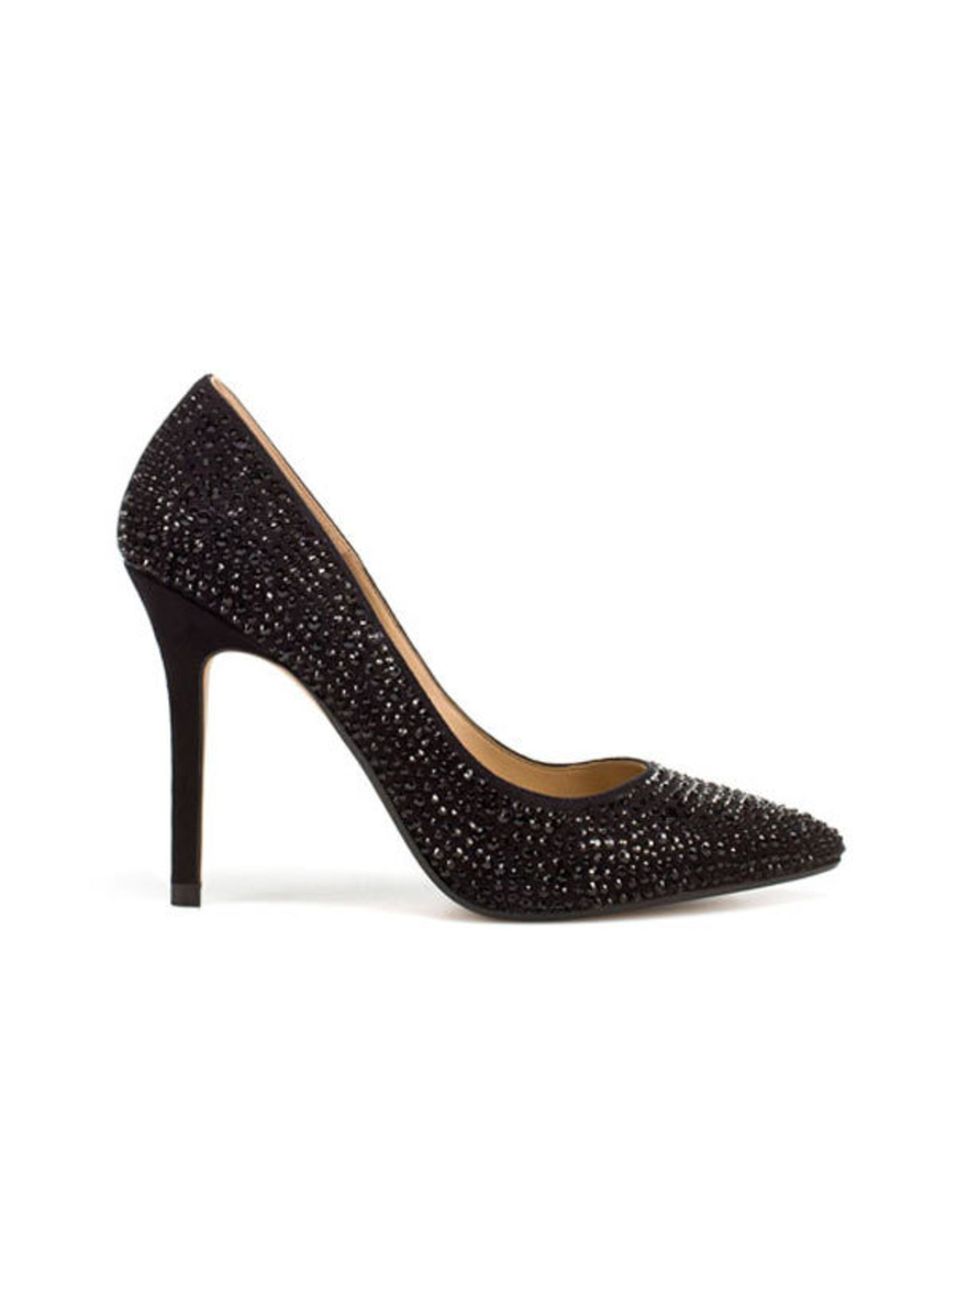 <p><a href="http://www.zara.com/webapp/wcs/stores/servlet/product/uk/en/zara-I2011/131002/677503/SPARKLE%2BCOURT%2BSHOE">Zara</a> sparkle court shoe, £59.99</p>